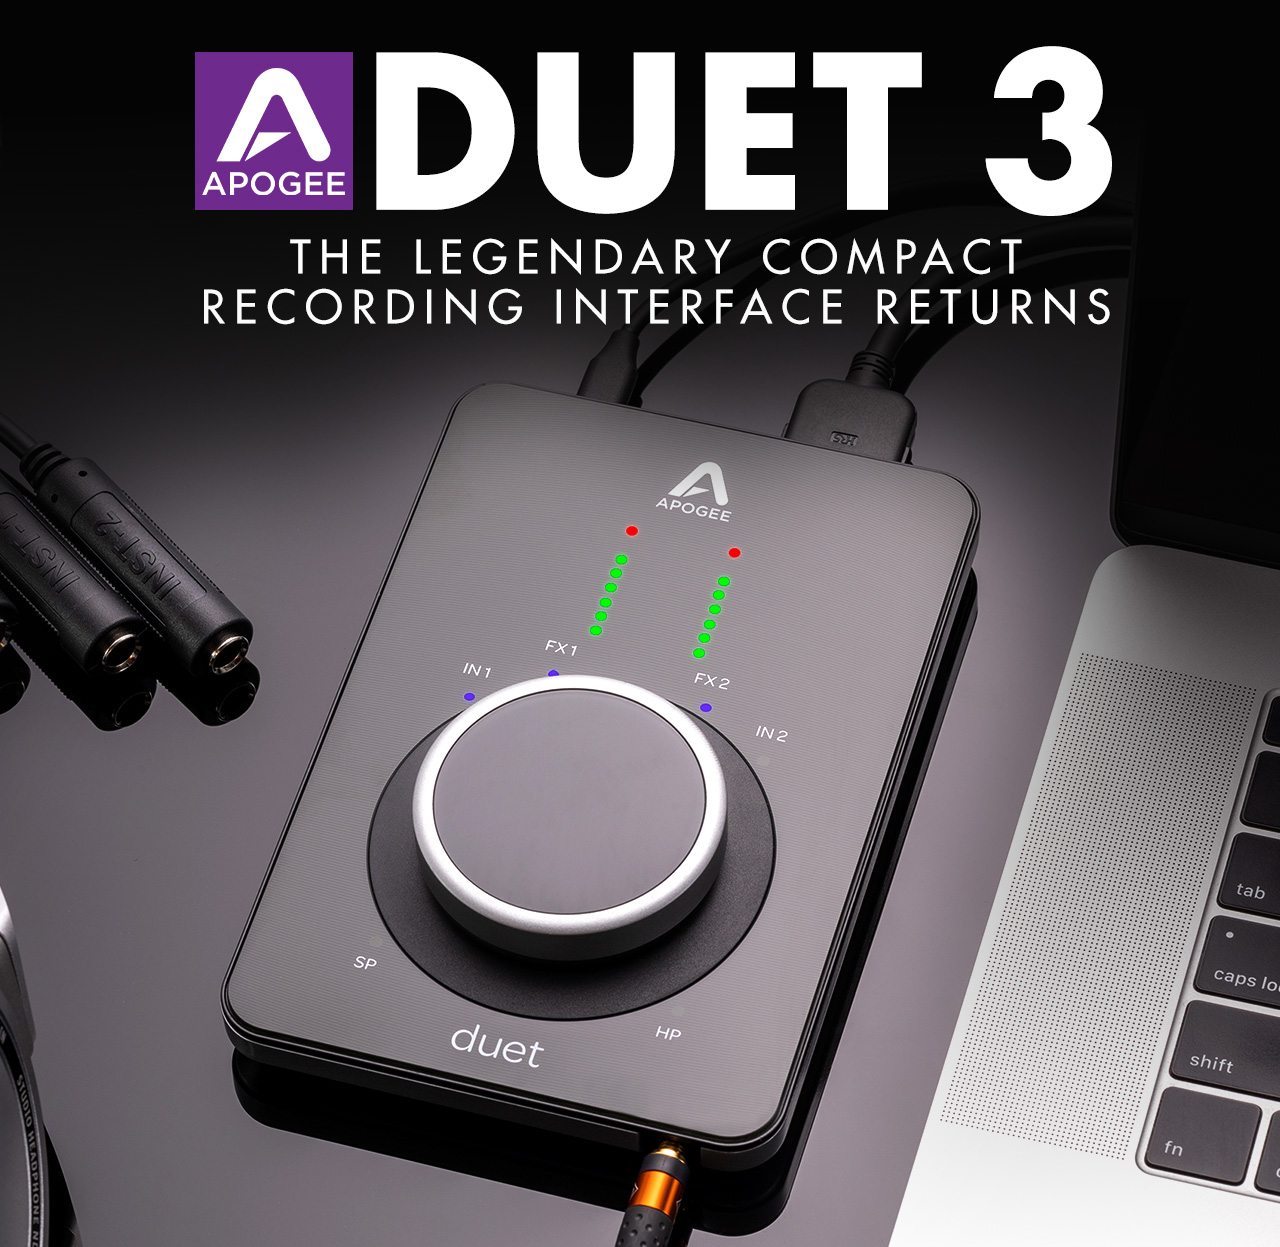 Apogee Duet 3: The Legendary Compact Recording Interface Returns